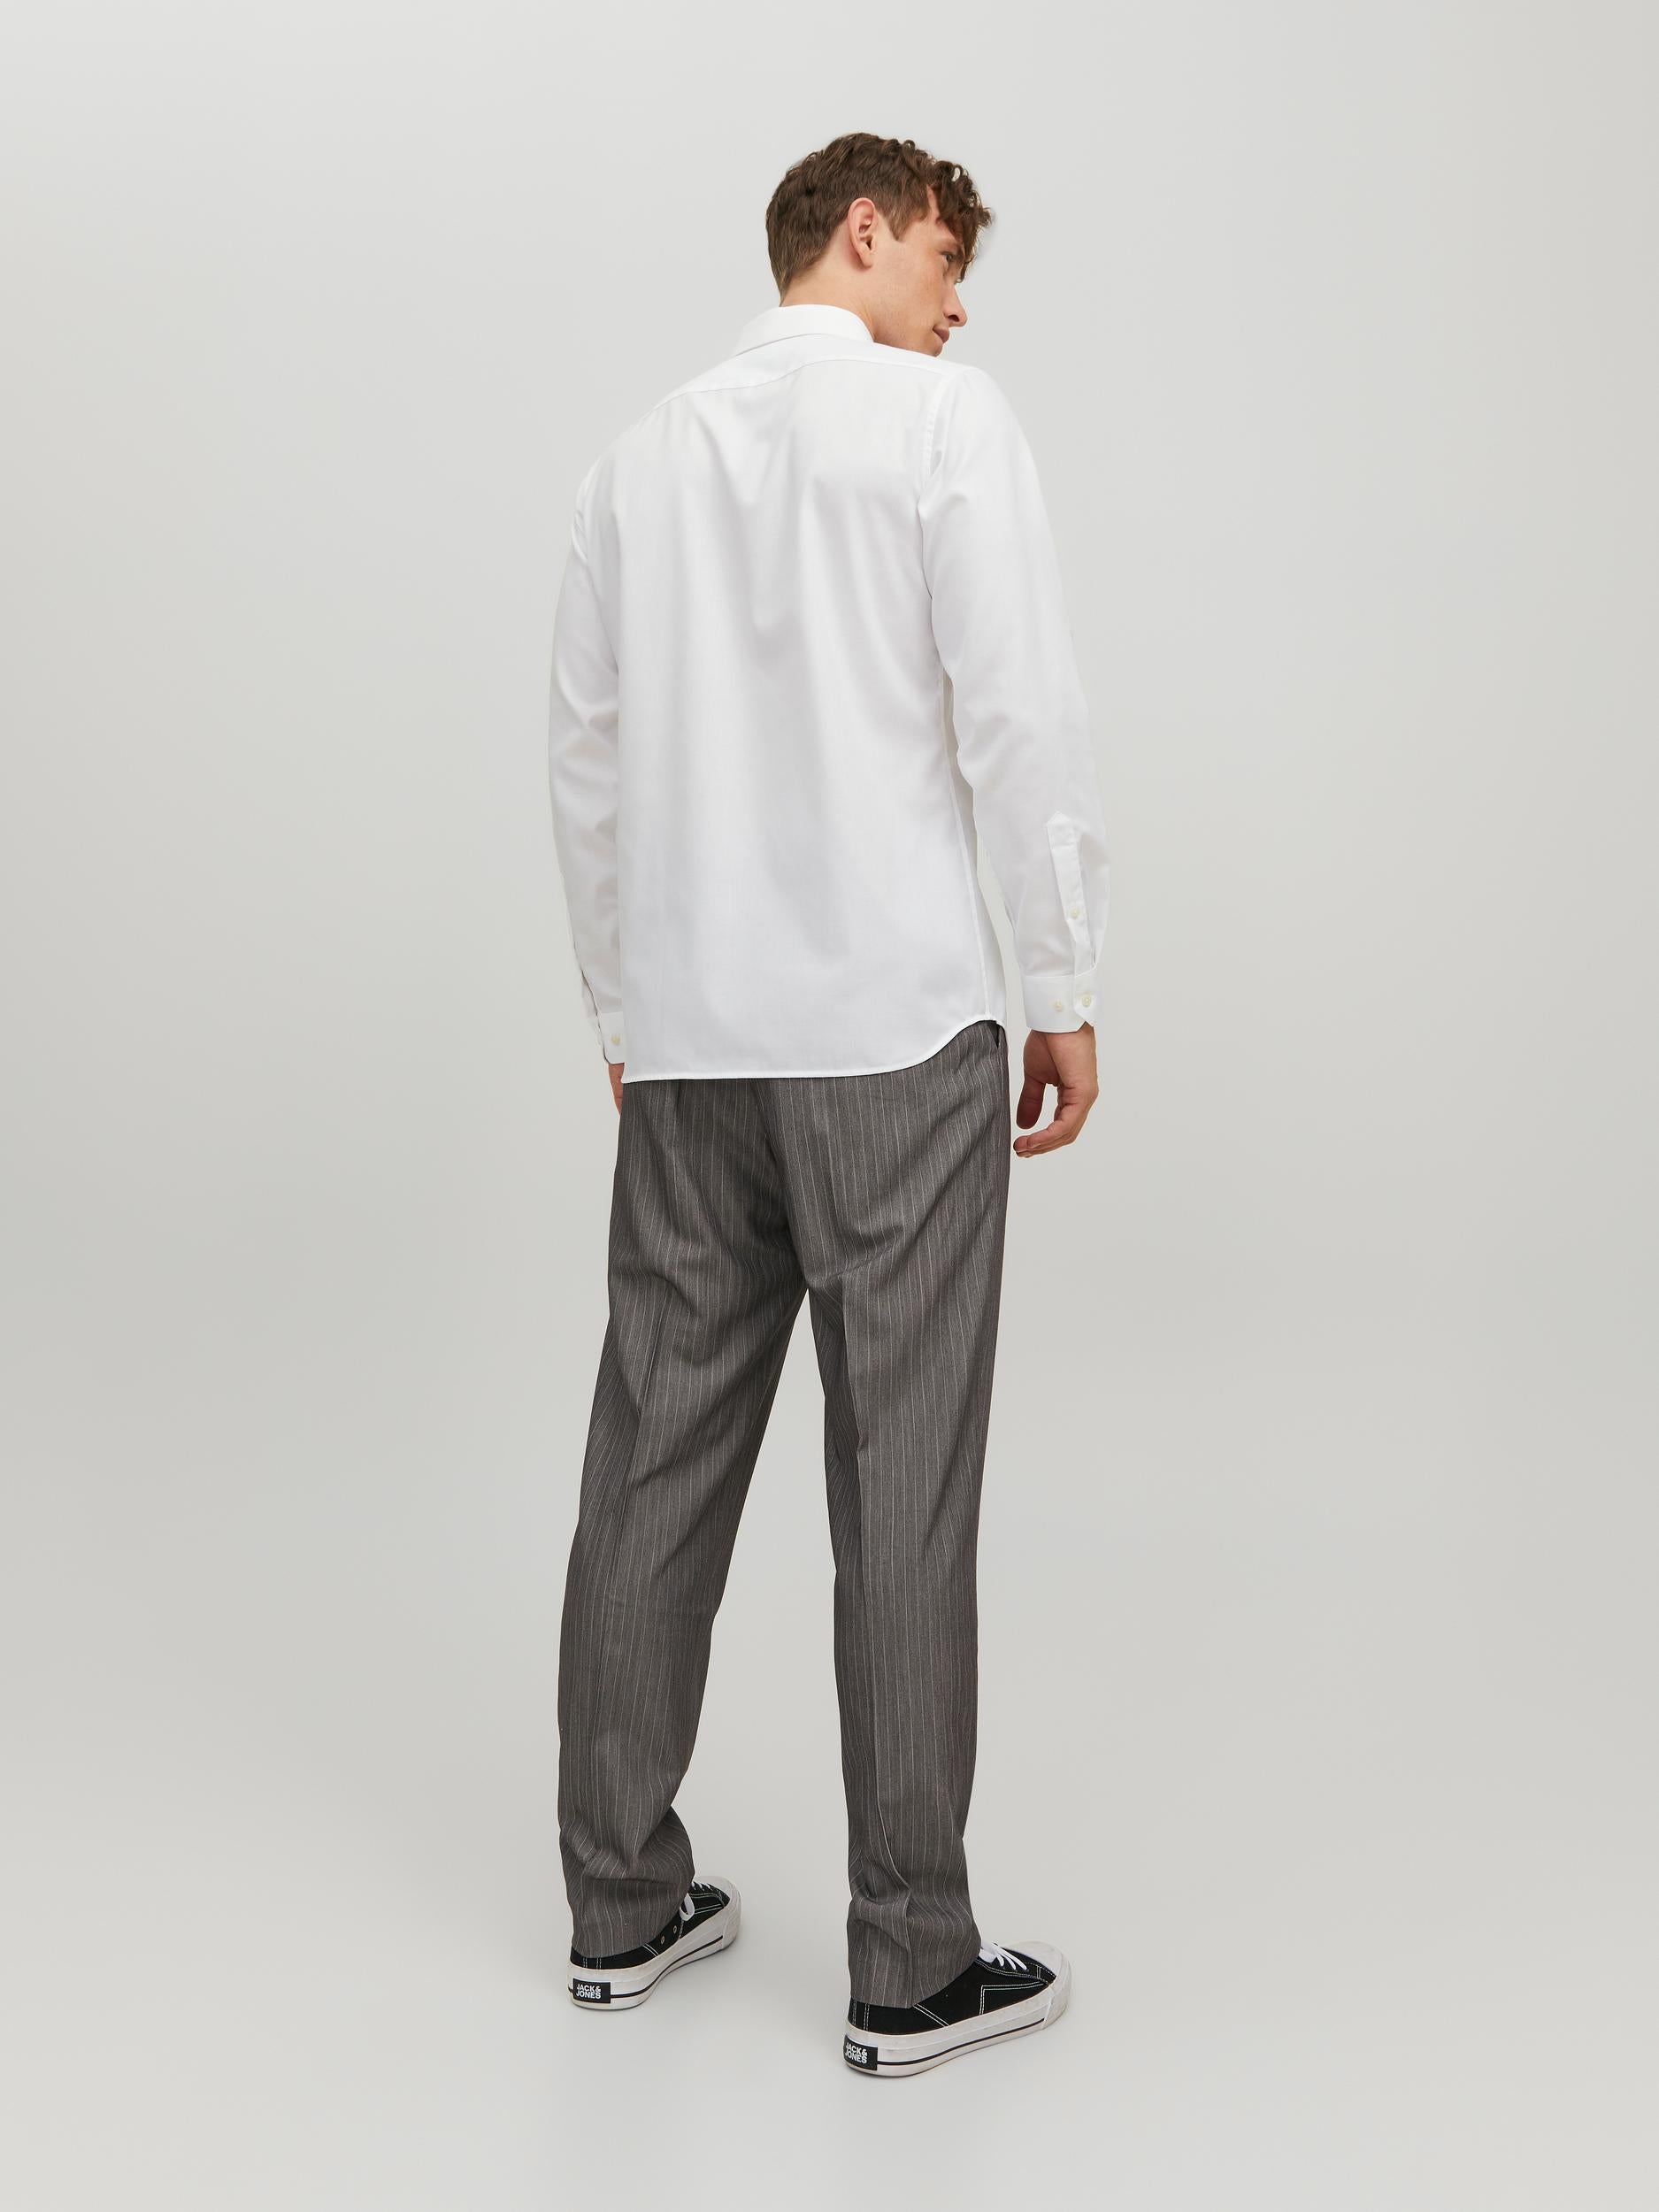 Men's Parker White Shirt-Back View